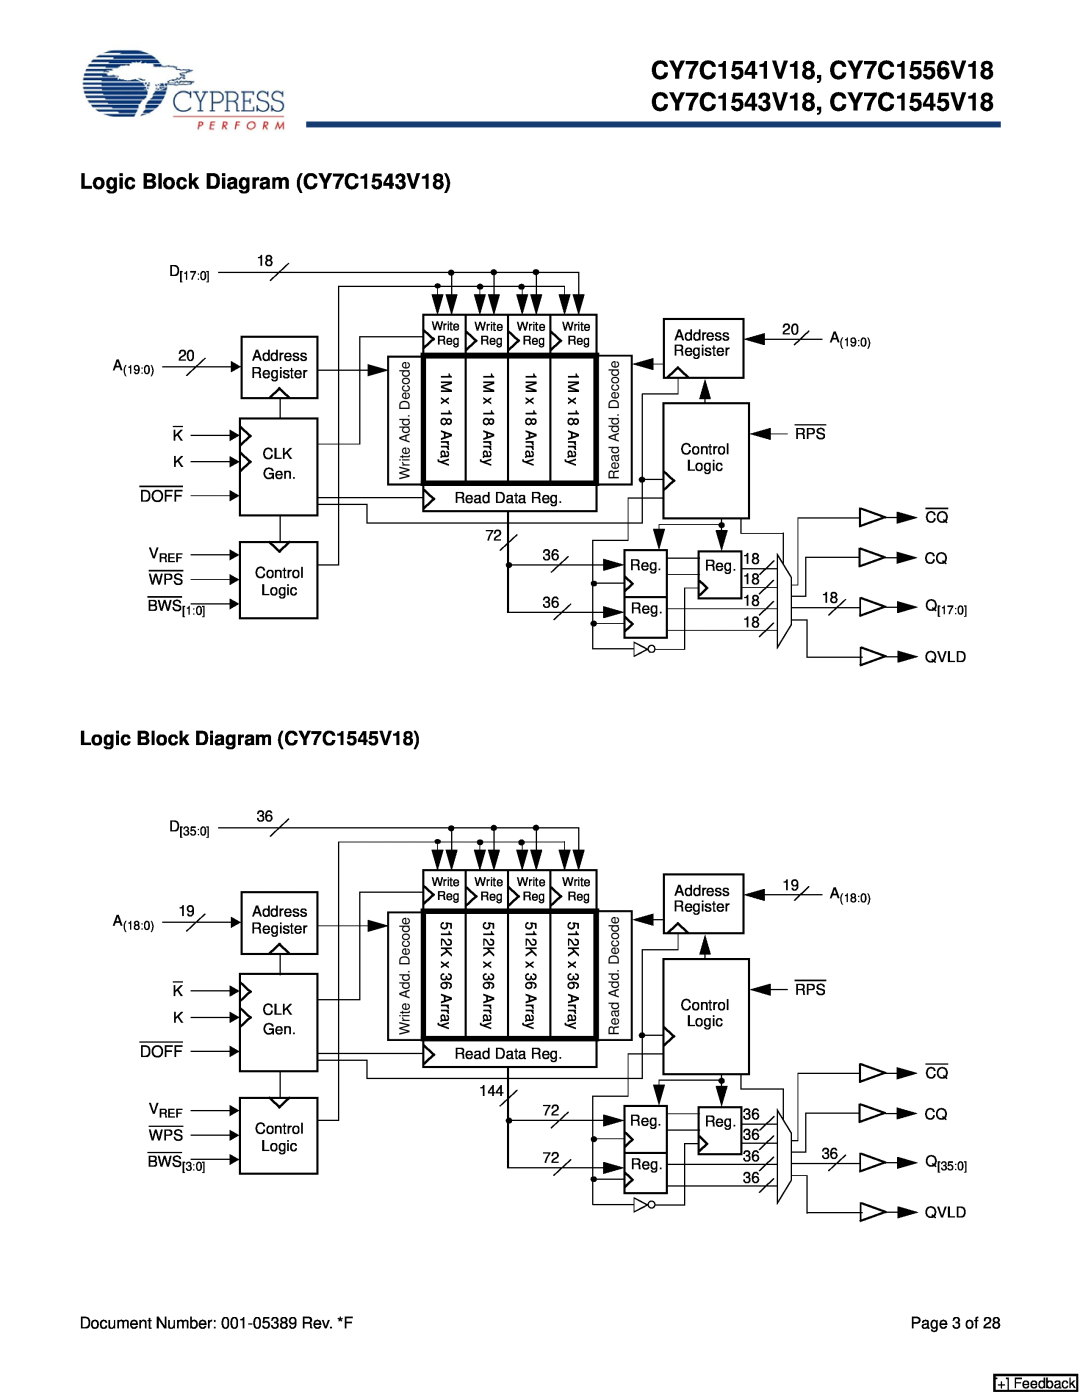 Cypress CY7C1541V18, CY7C1556V18 manual Logic Block Diagram CY7C1543V18, Logic Block Diagram CY7C1545V18, + Feedback 